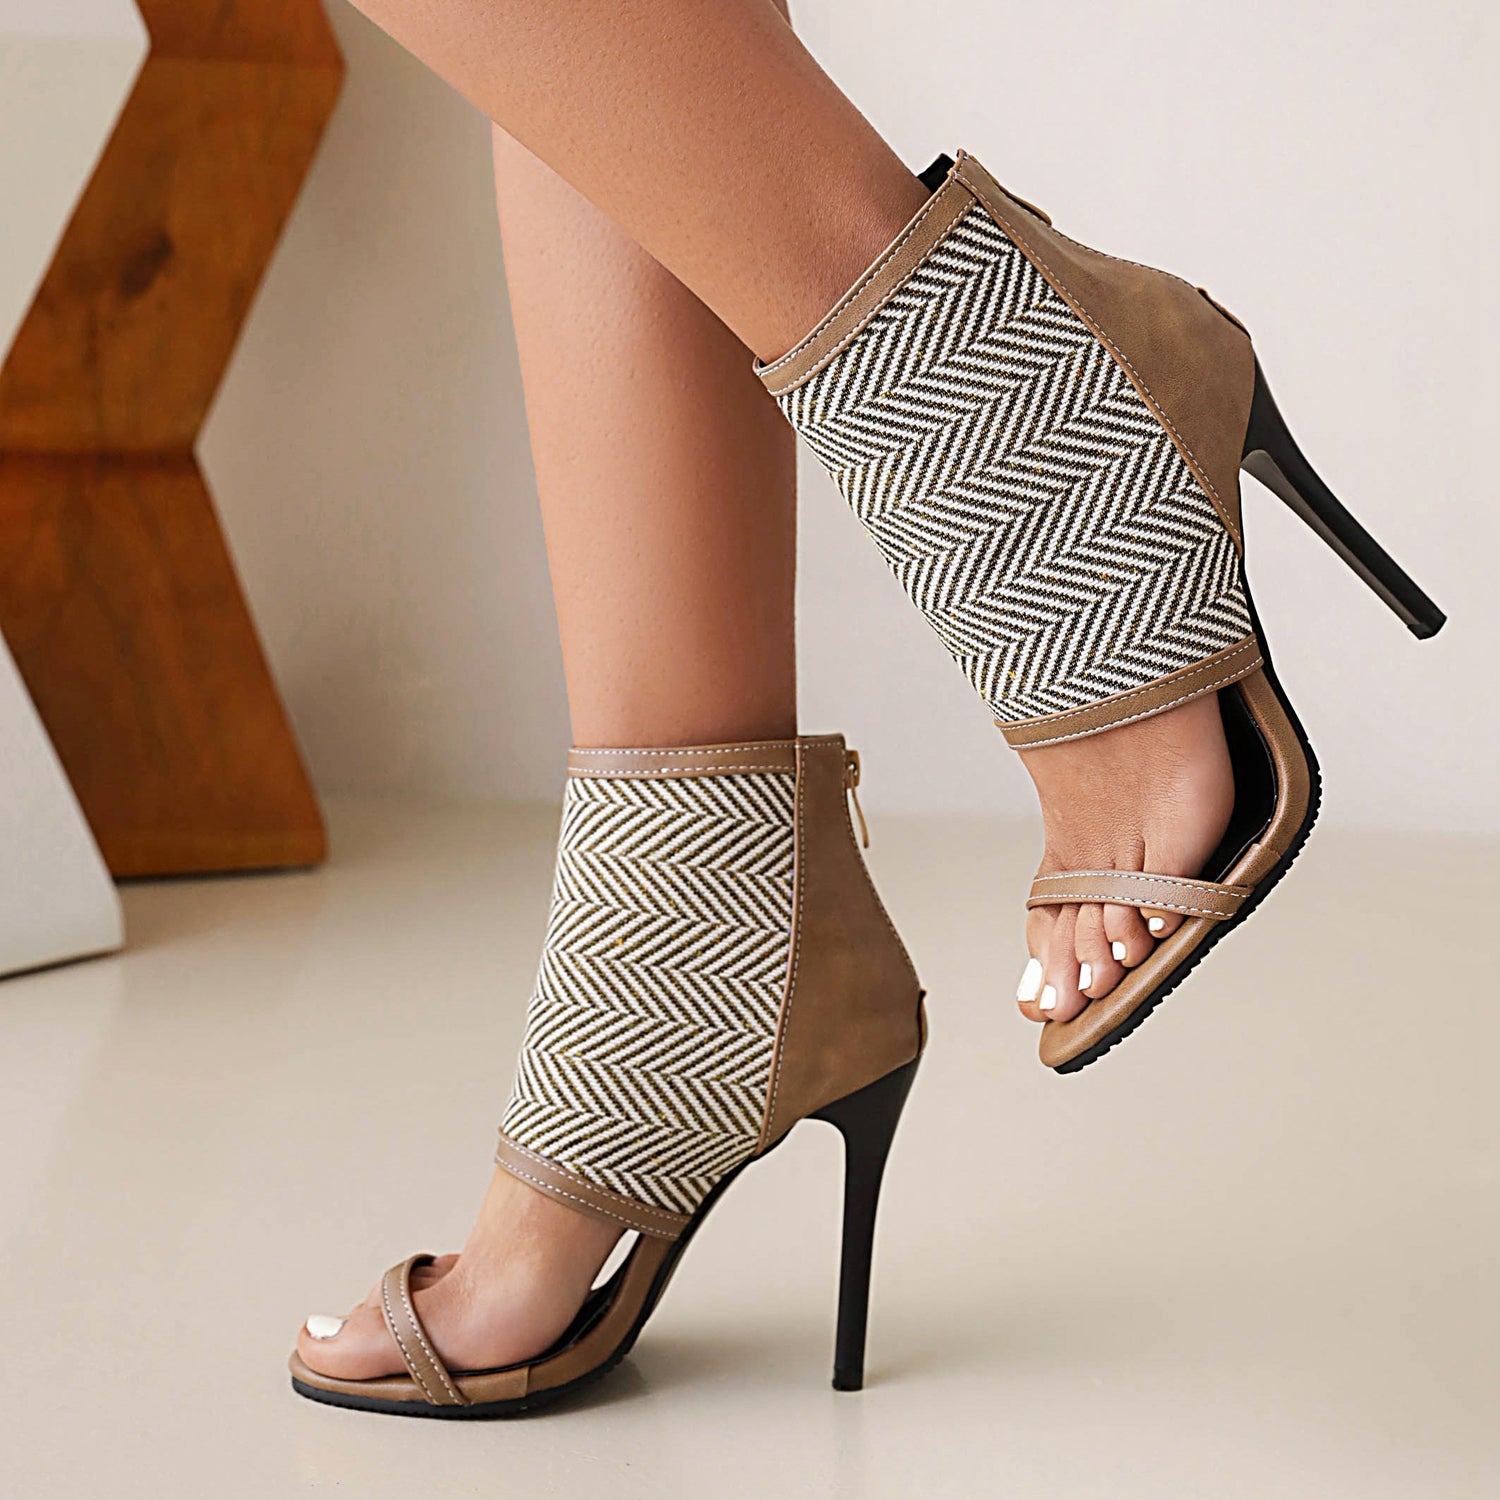 Bigsizeheels Stiletto Heel Zipper Suede Upper Ankle Strap Sandals - Gray best oversized womens heels are from bigsizeheel®